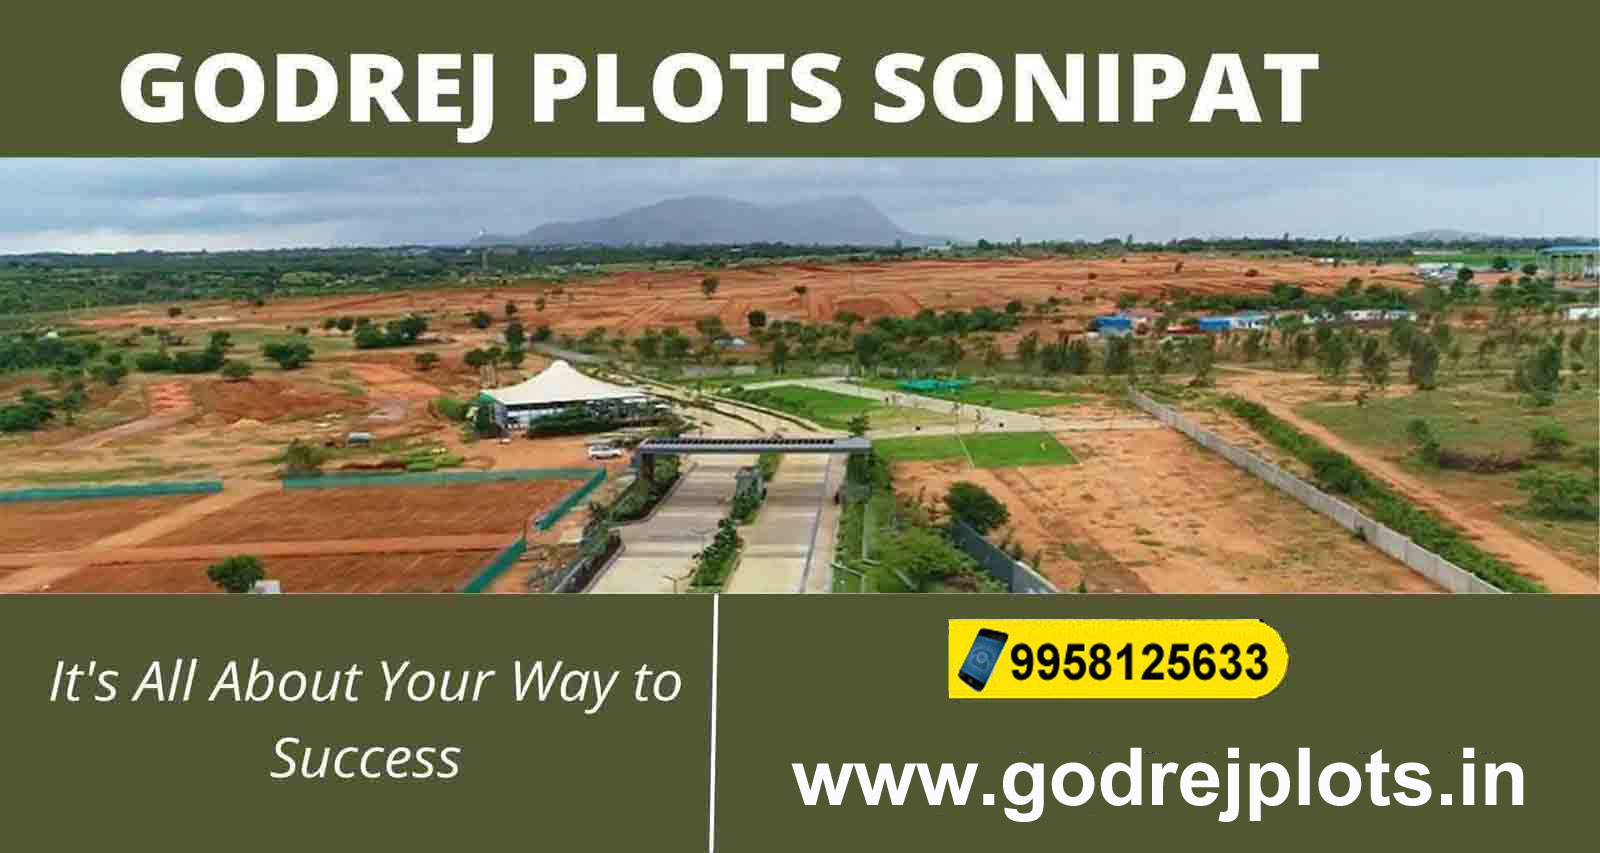 Godrej Plots Sonipat with huge residential development in 50 acres